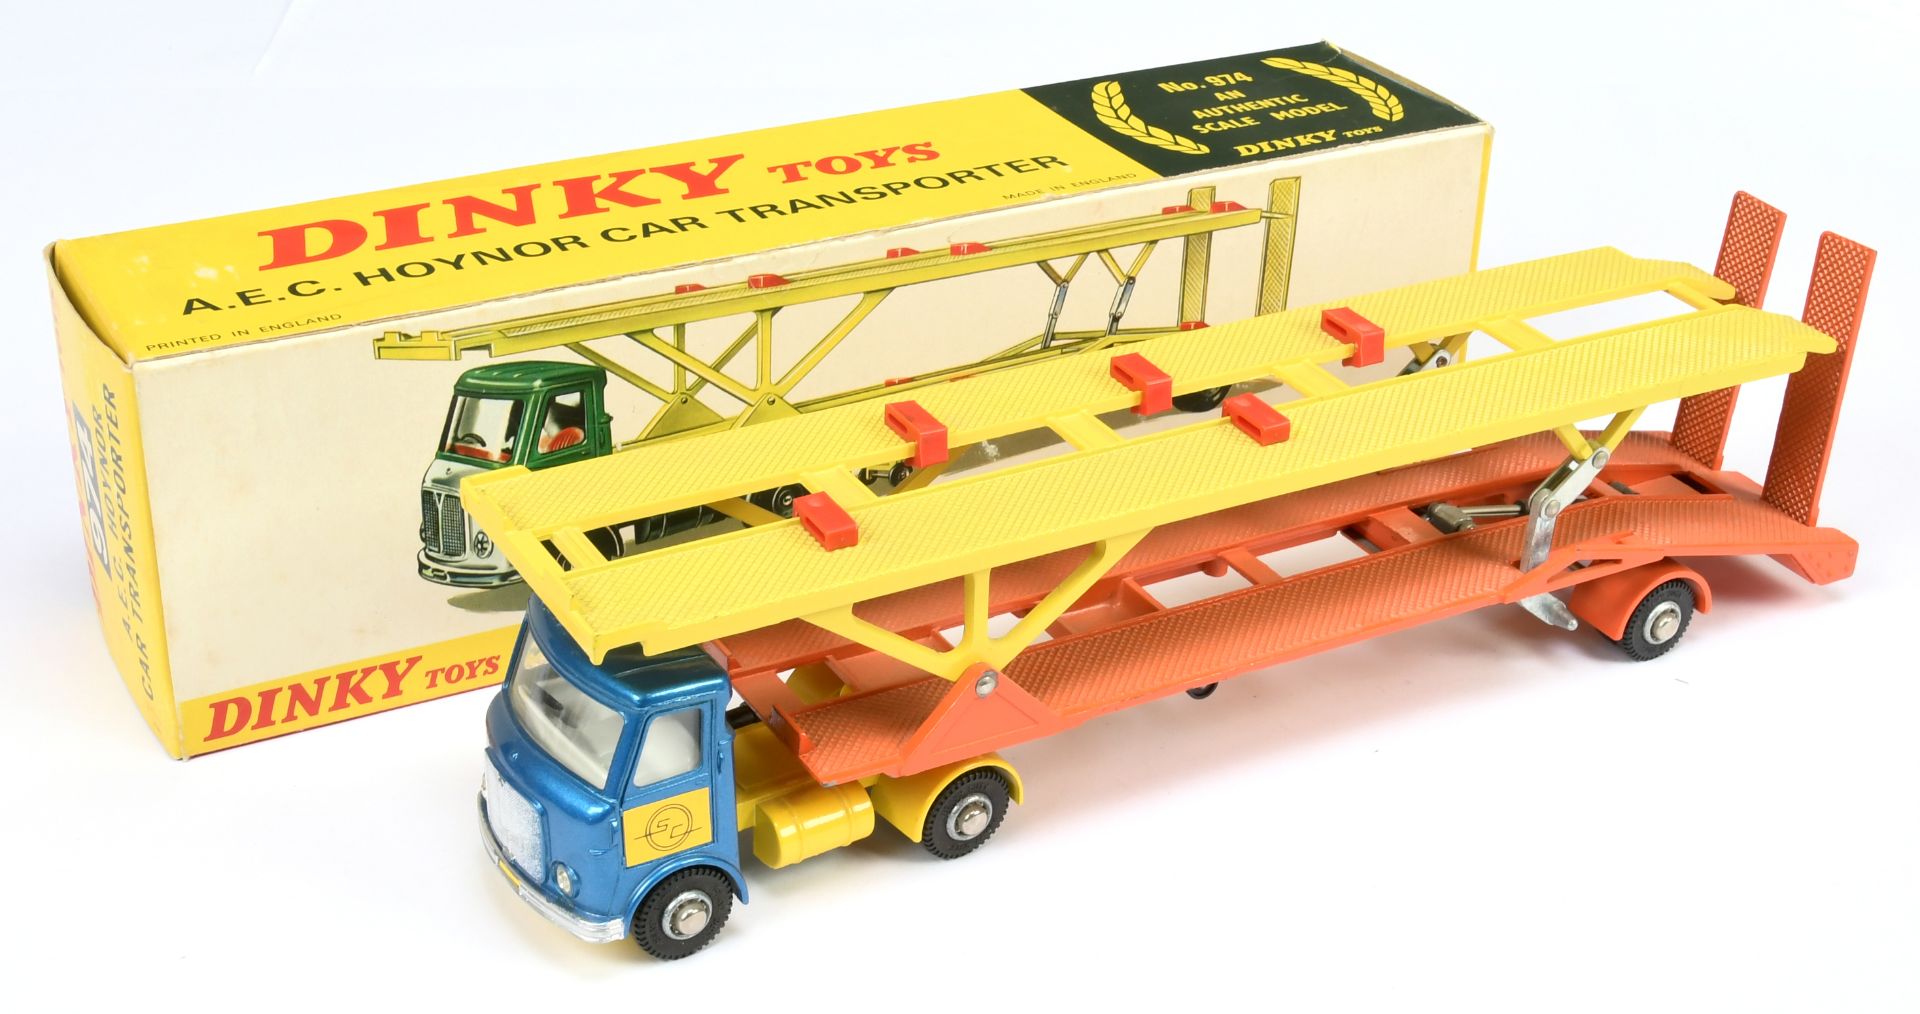 Dinky Toys 974 AEC Hoynor Car Transporter "Silcock & Colling Ltd" - Metallic blue cab with yellow...